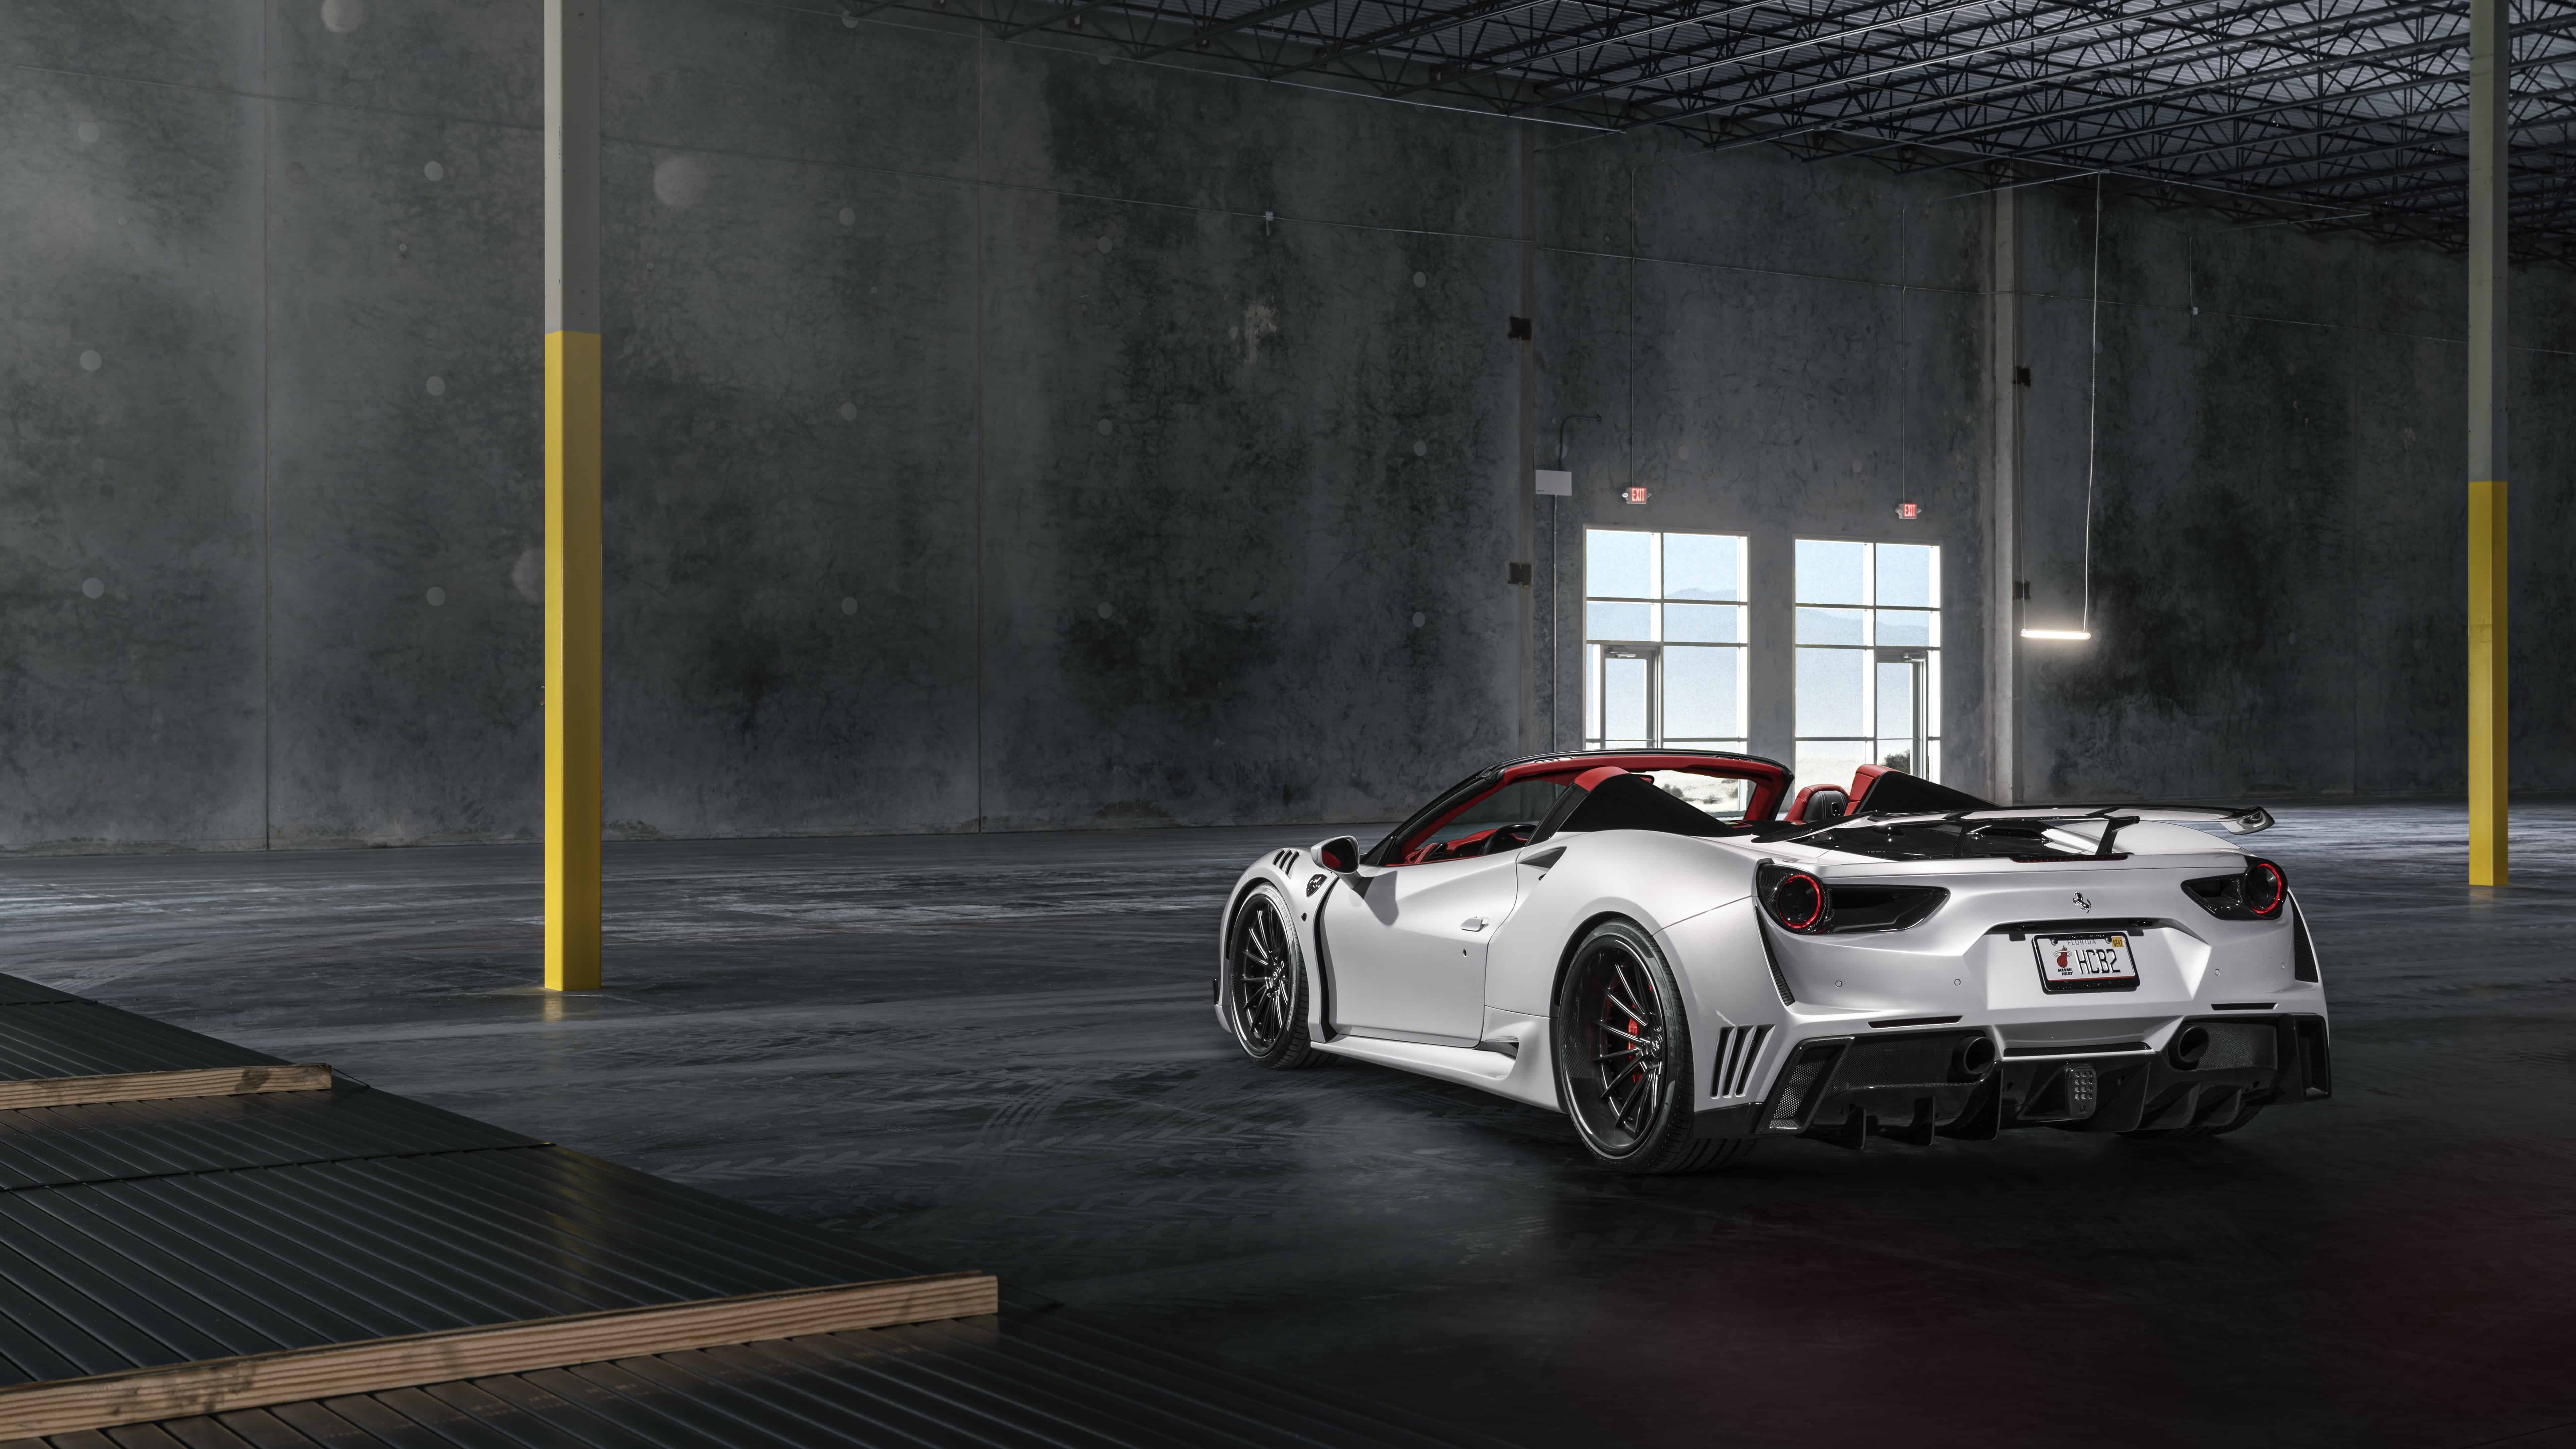 8K Ferrari Wallpapers - Top Free 8K Ferrari Backgrounds ...